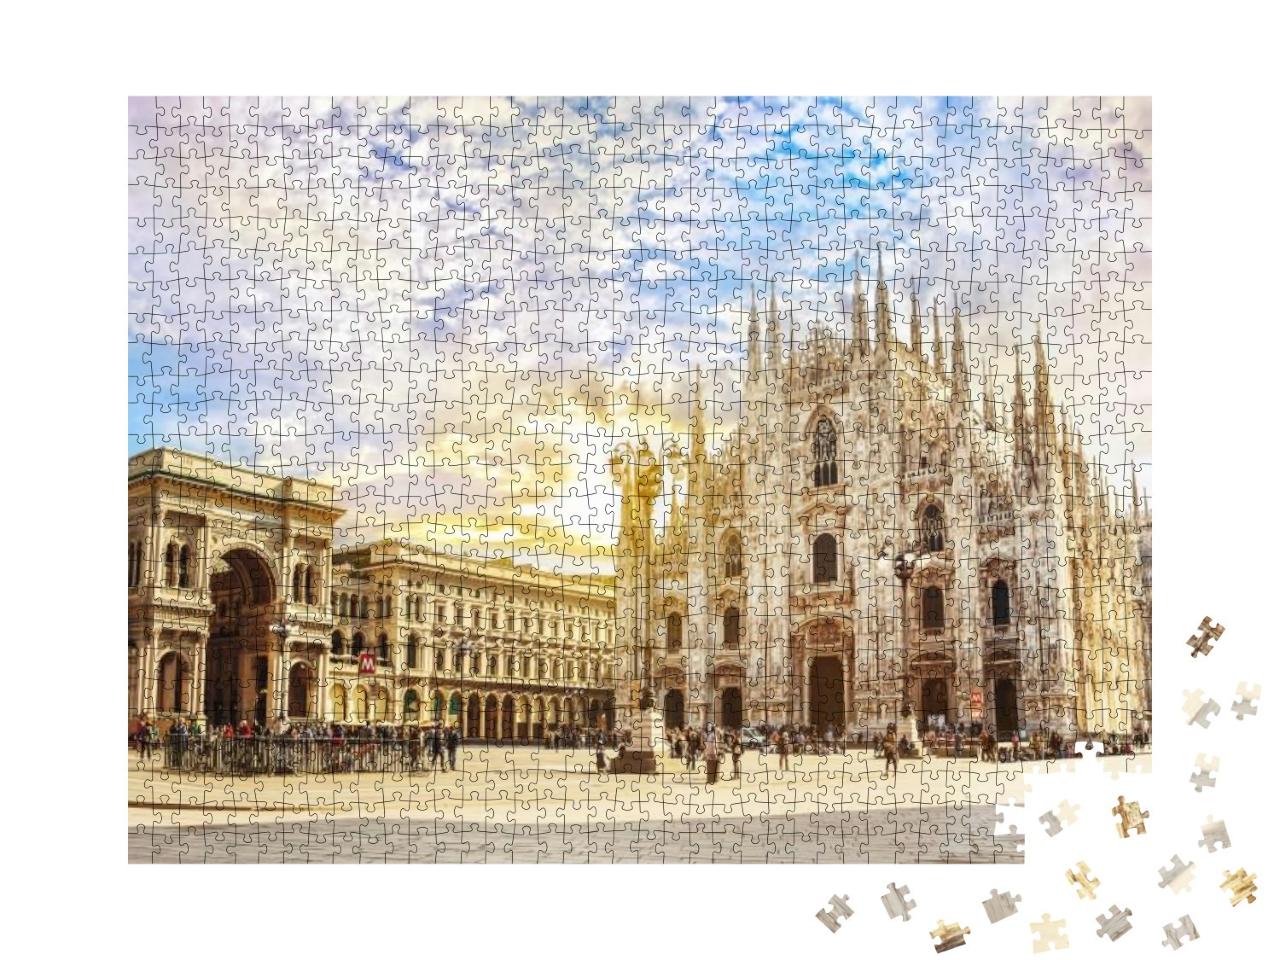 Puzzle 1000 Teile „Dom und Galerie Vittorio Emanuele auf der Piazza Duomo, Mailand“